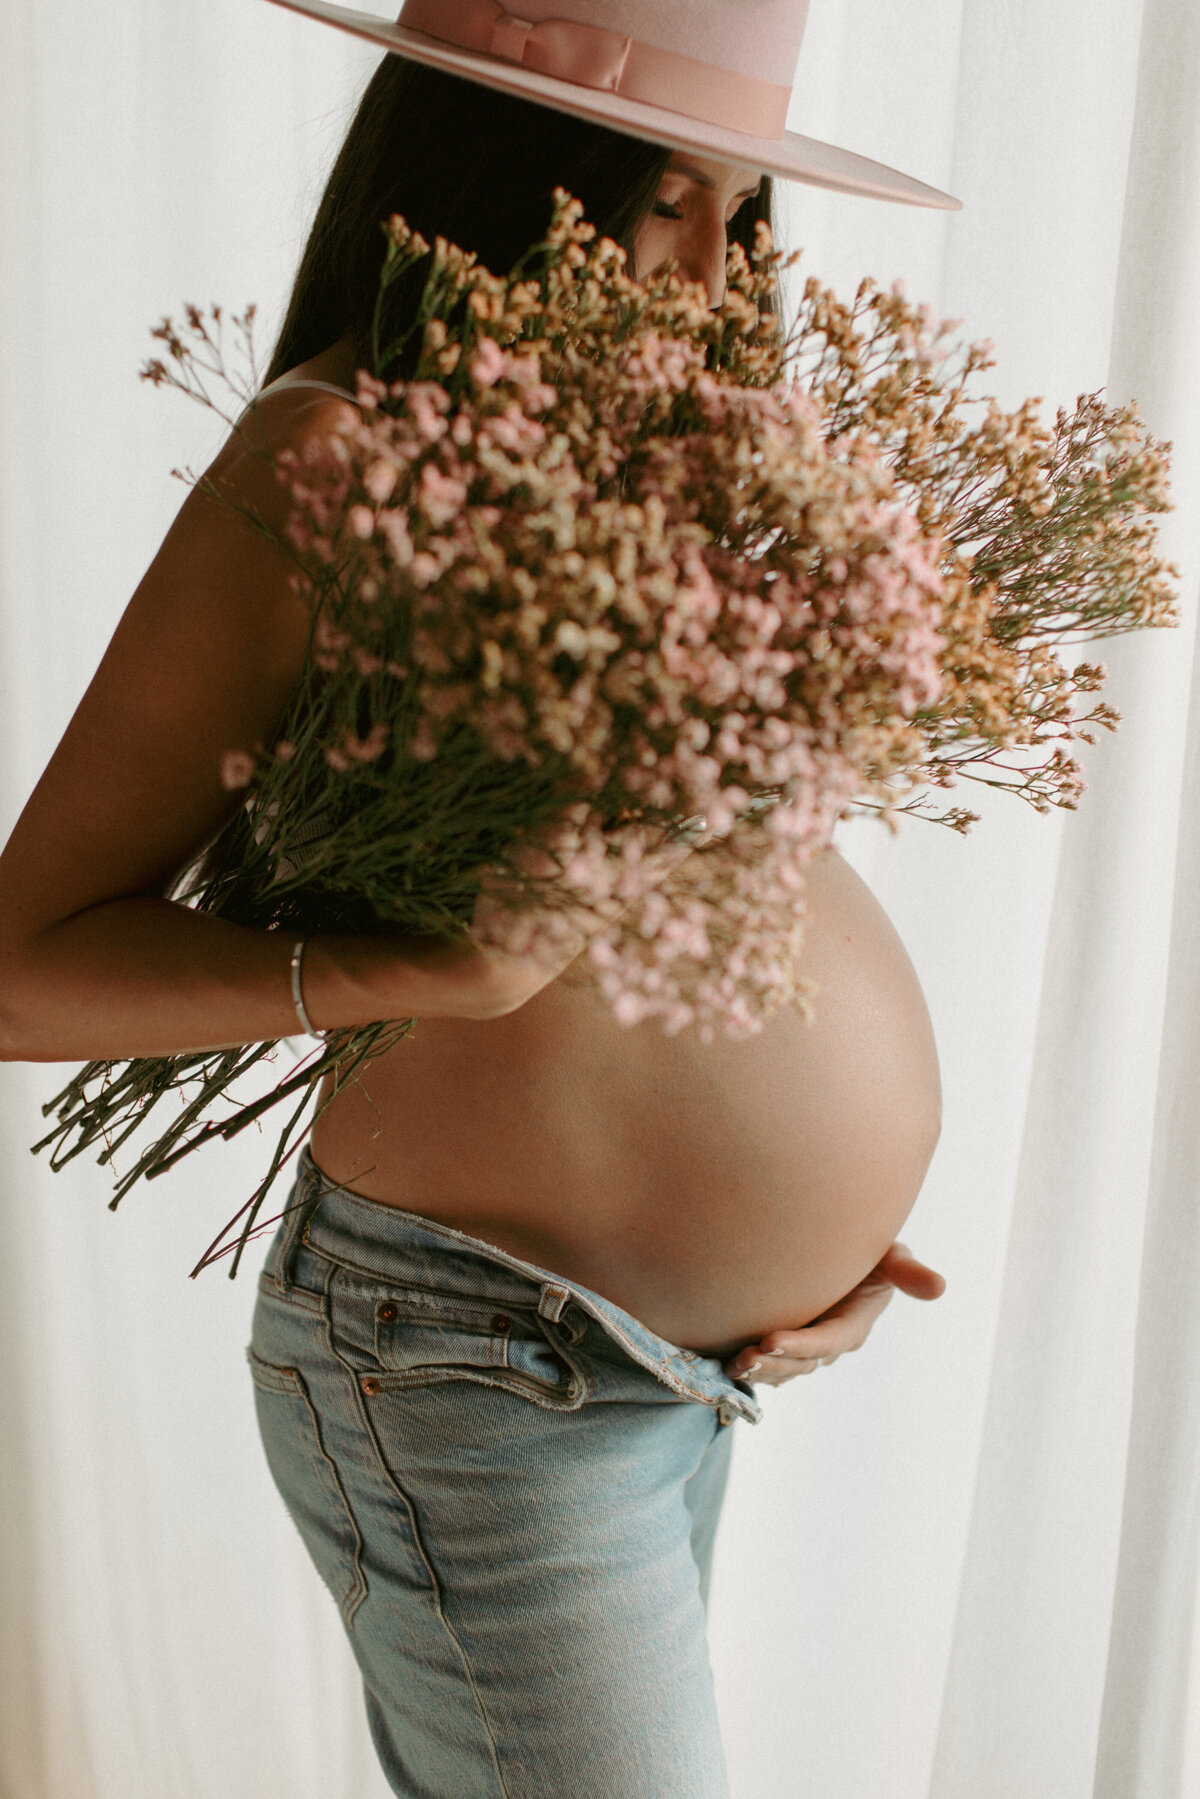 AhnaMariaPhotography_Maternity_Whitney&Conrad-13